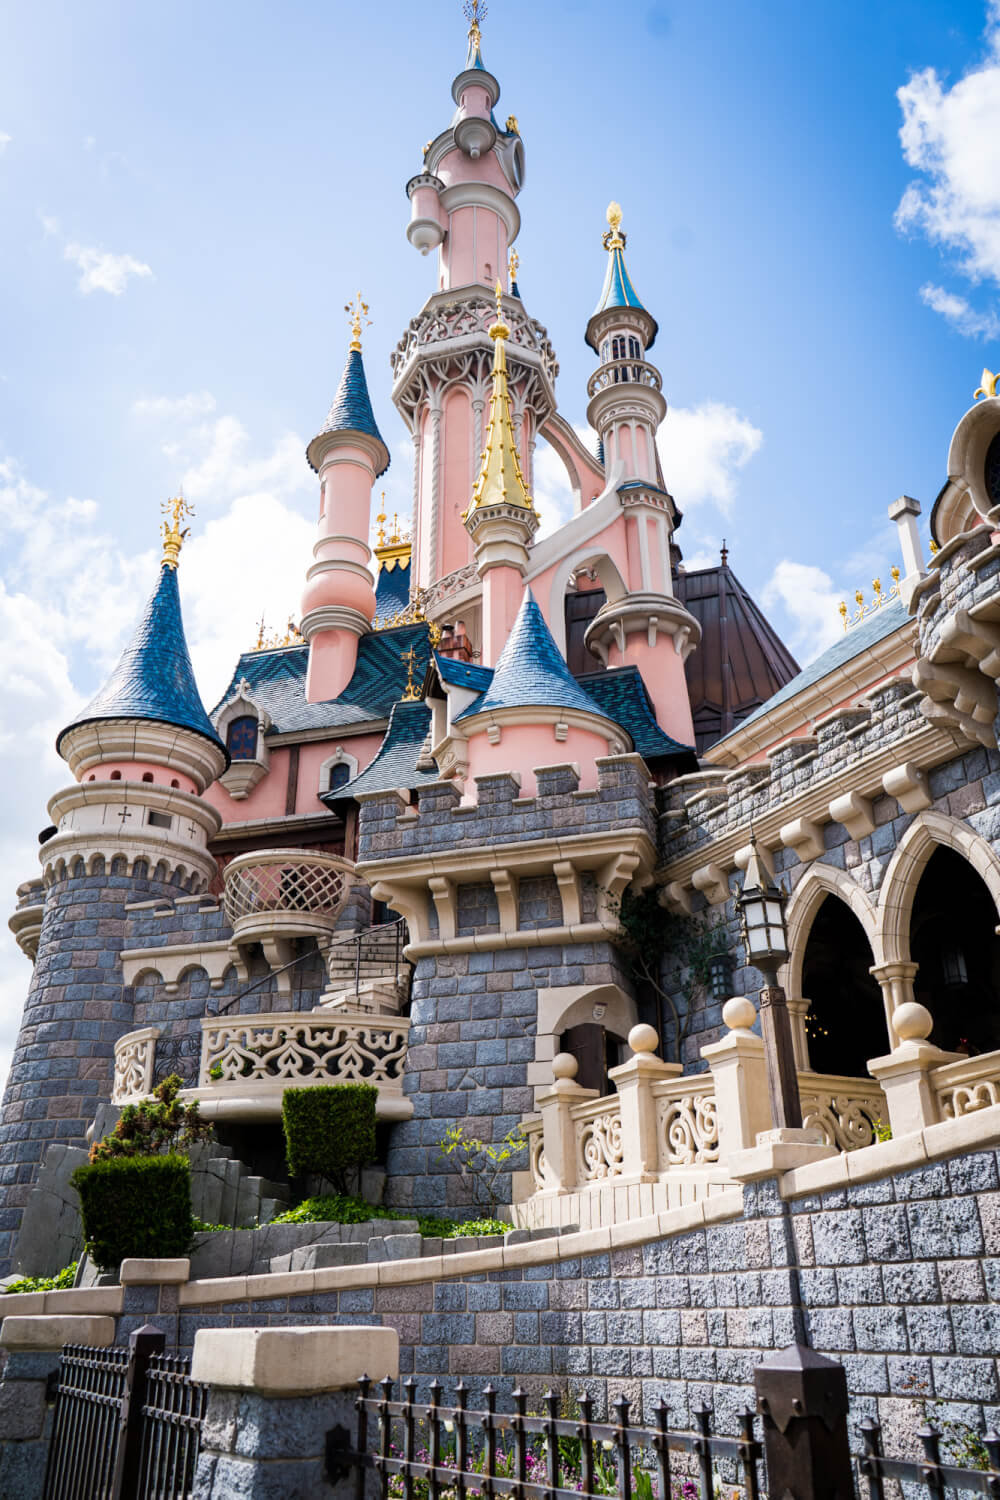 Exterior of the Disneyland Paris castle at Disneyland Park in Marne la Vallee, France